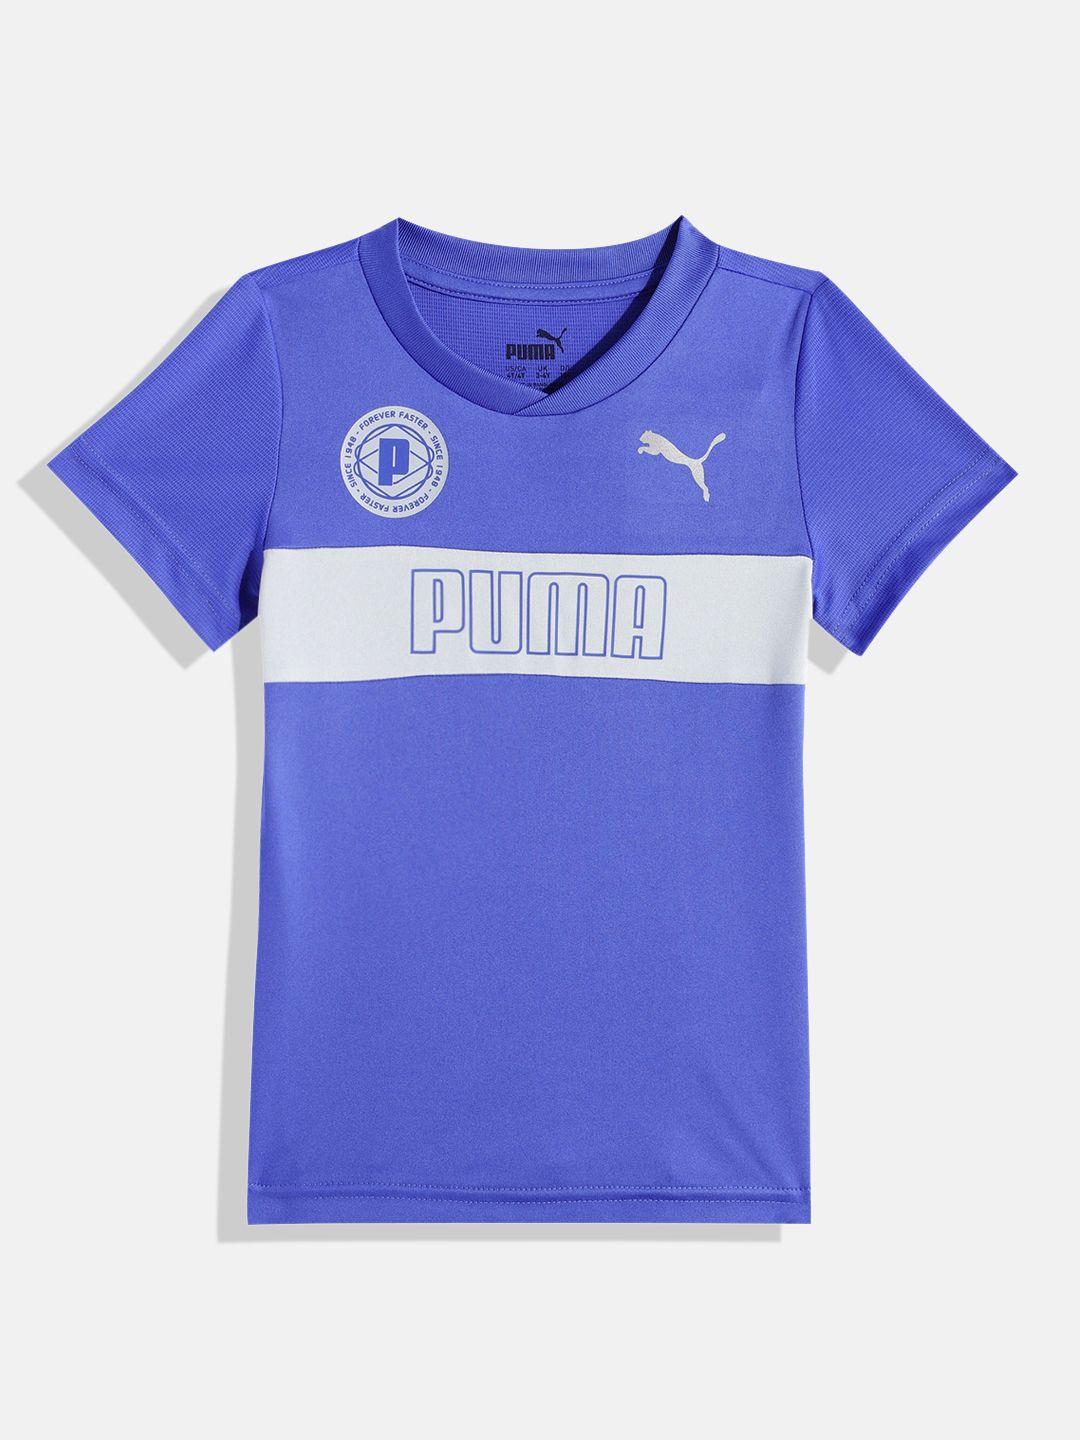 puma boys brand logo printed active sports graphic youth training t-shirt